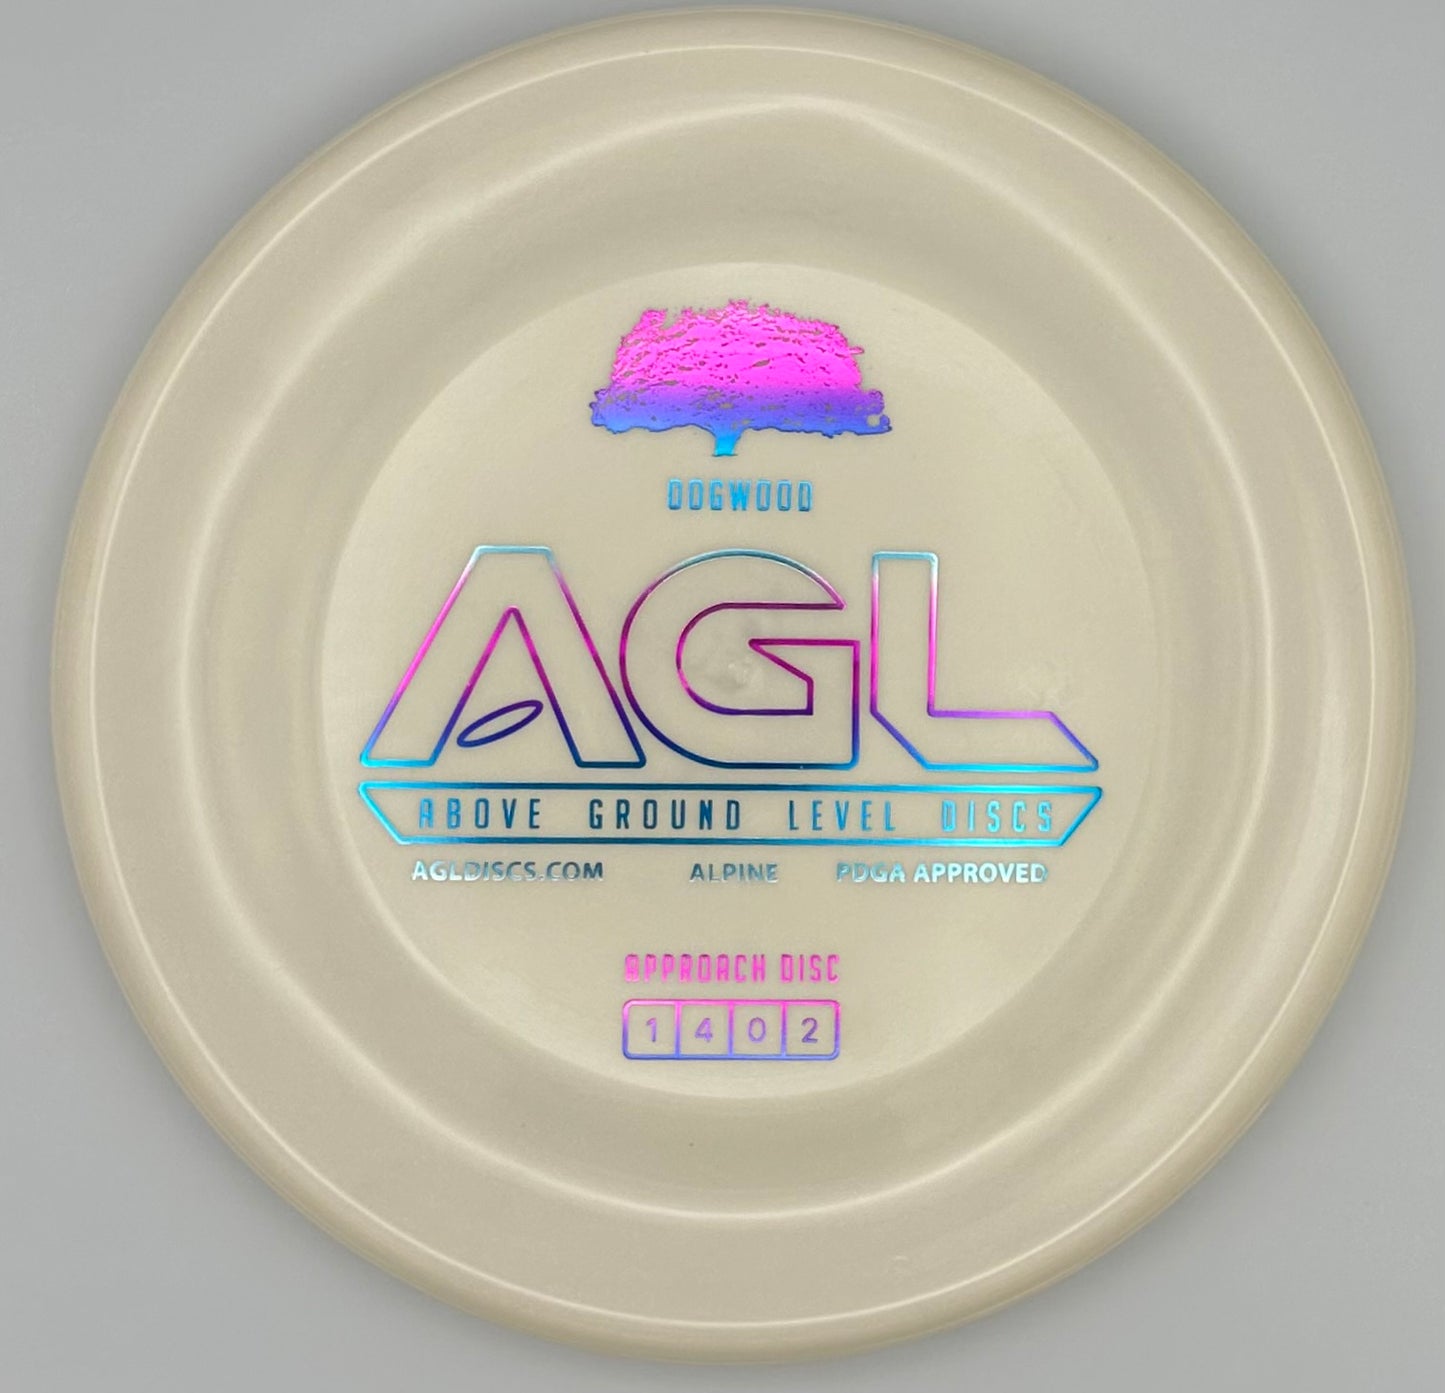 AGL Discs - Snowy White Alpine DogWood (AGL Bar Stamp)